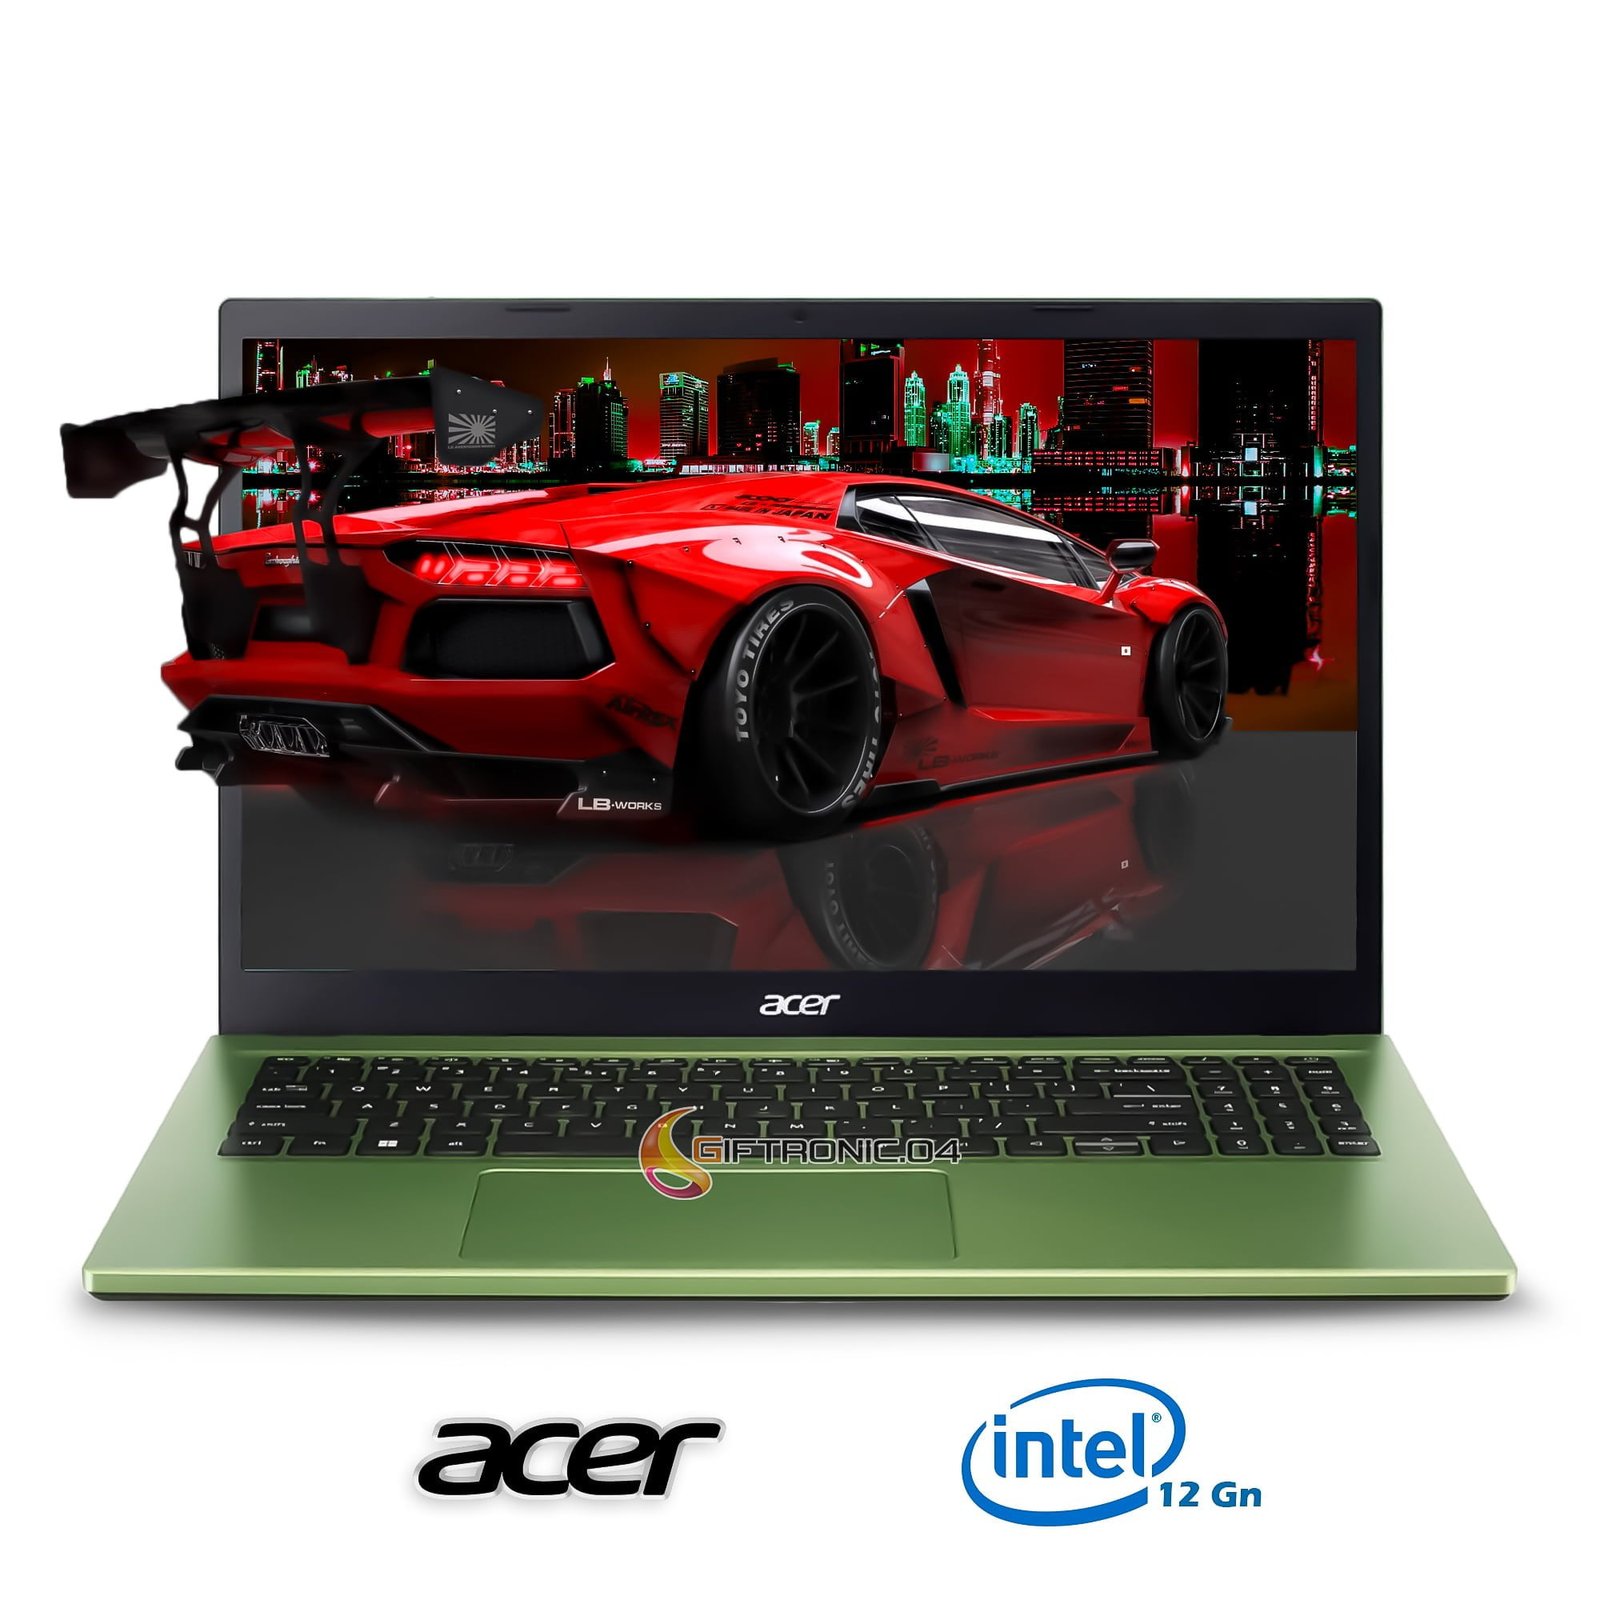 Portátil Acer 15.6' pulgadas Intel Core i5 Ram 8GB SSD - Giftronic.04